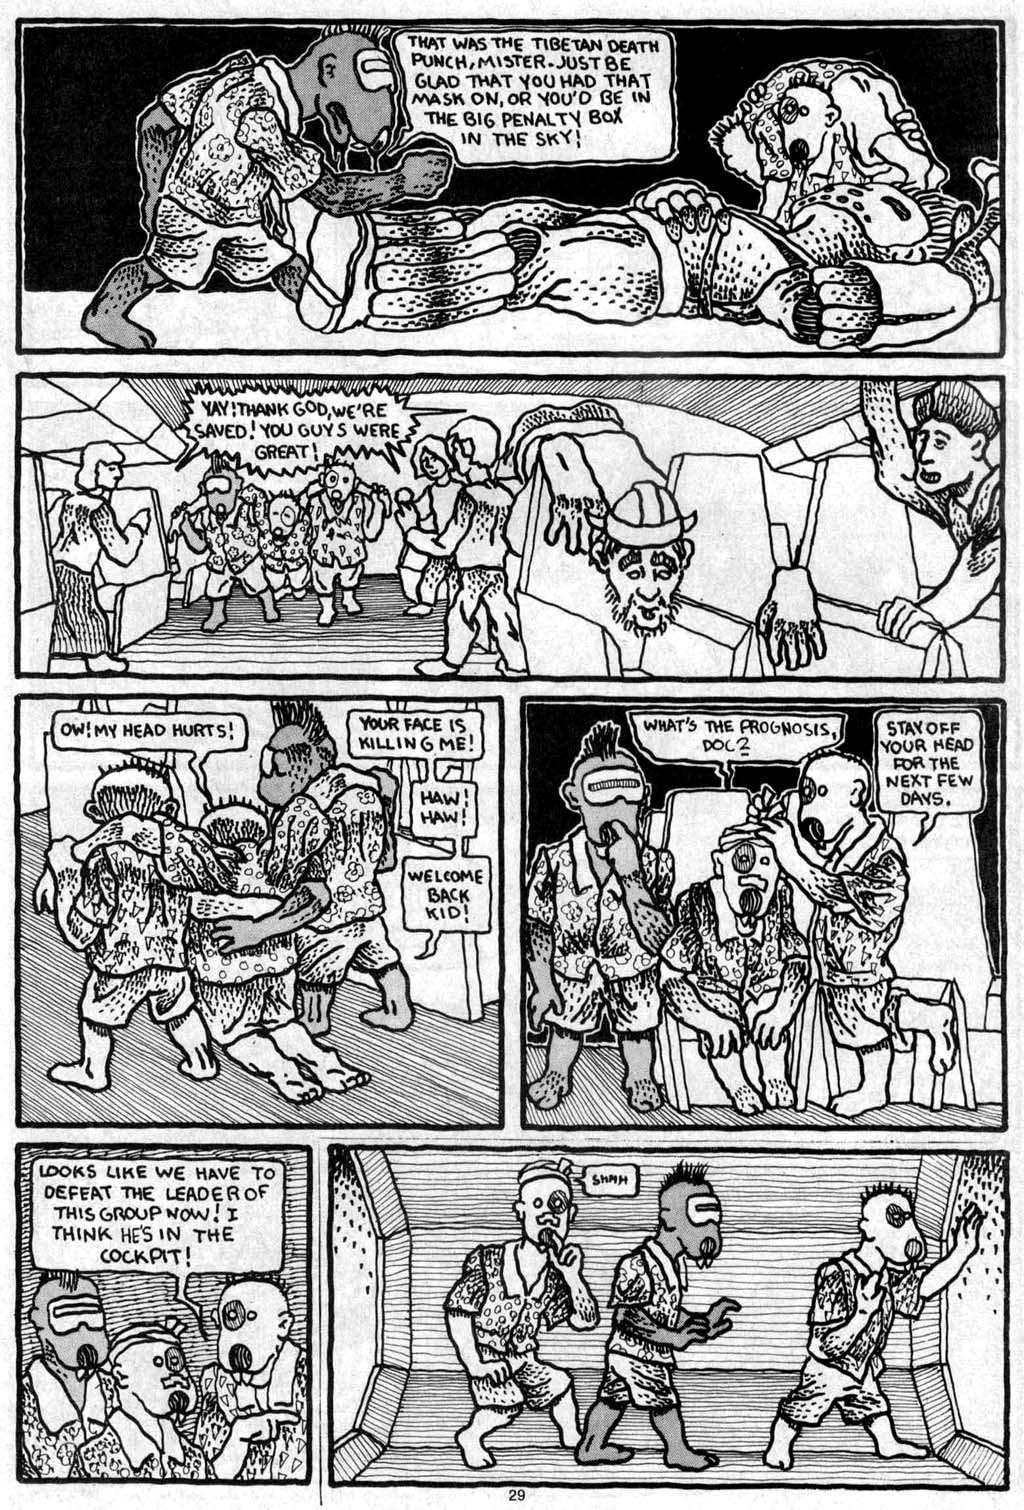 Read online Adolescent Radioactive Black Belt Hamsters comic -  Issue #1 - 29